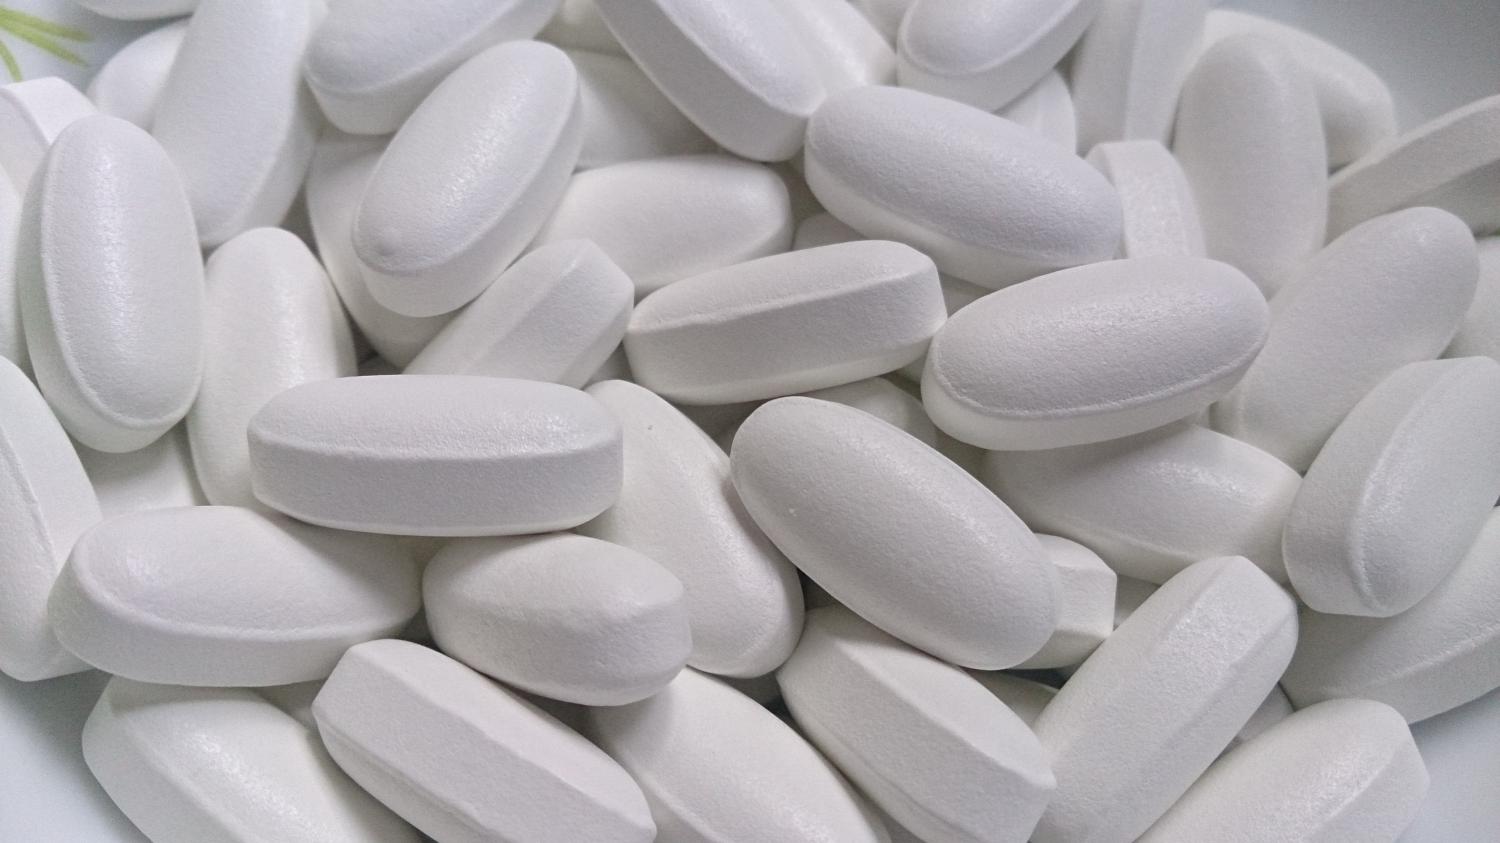 A photo of white pills